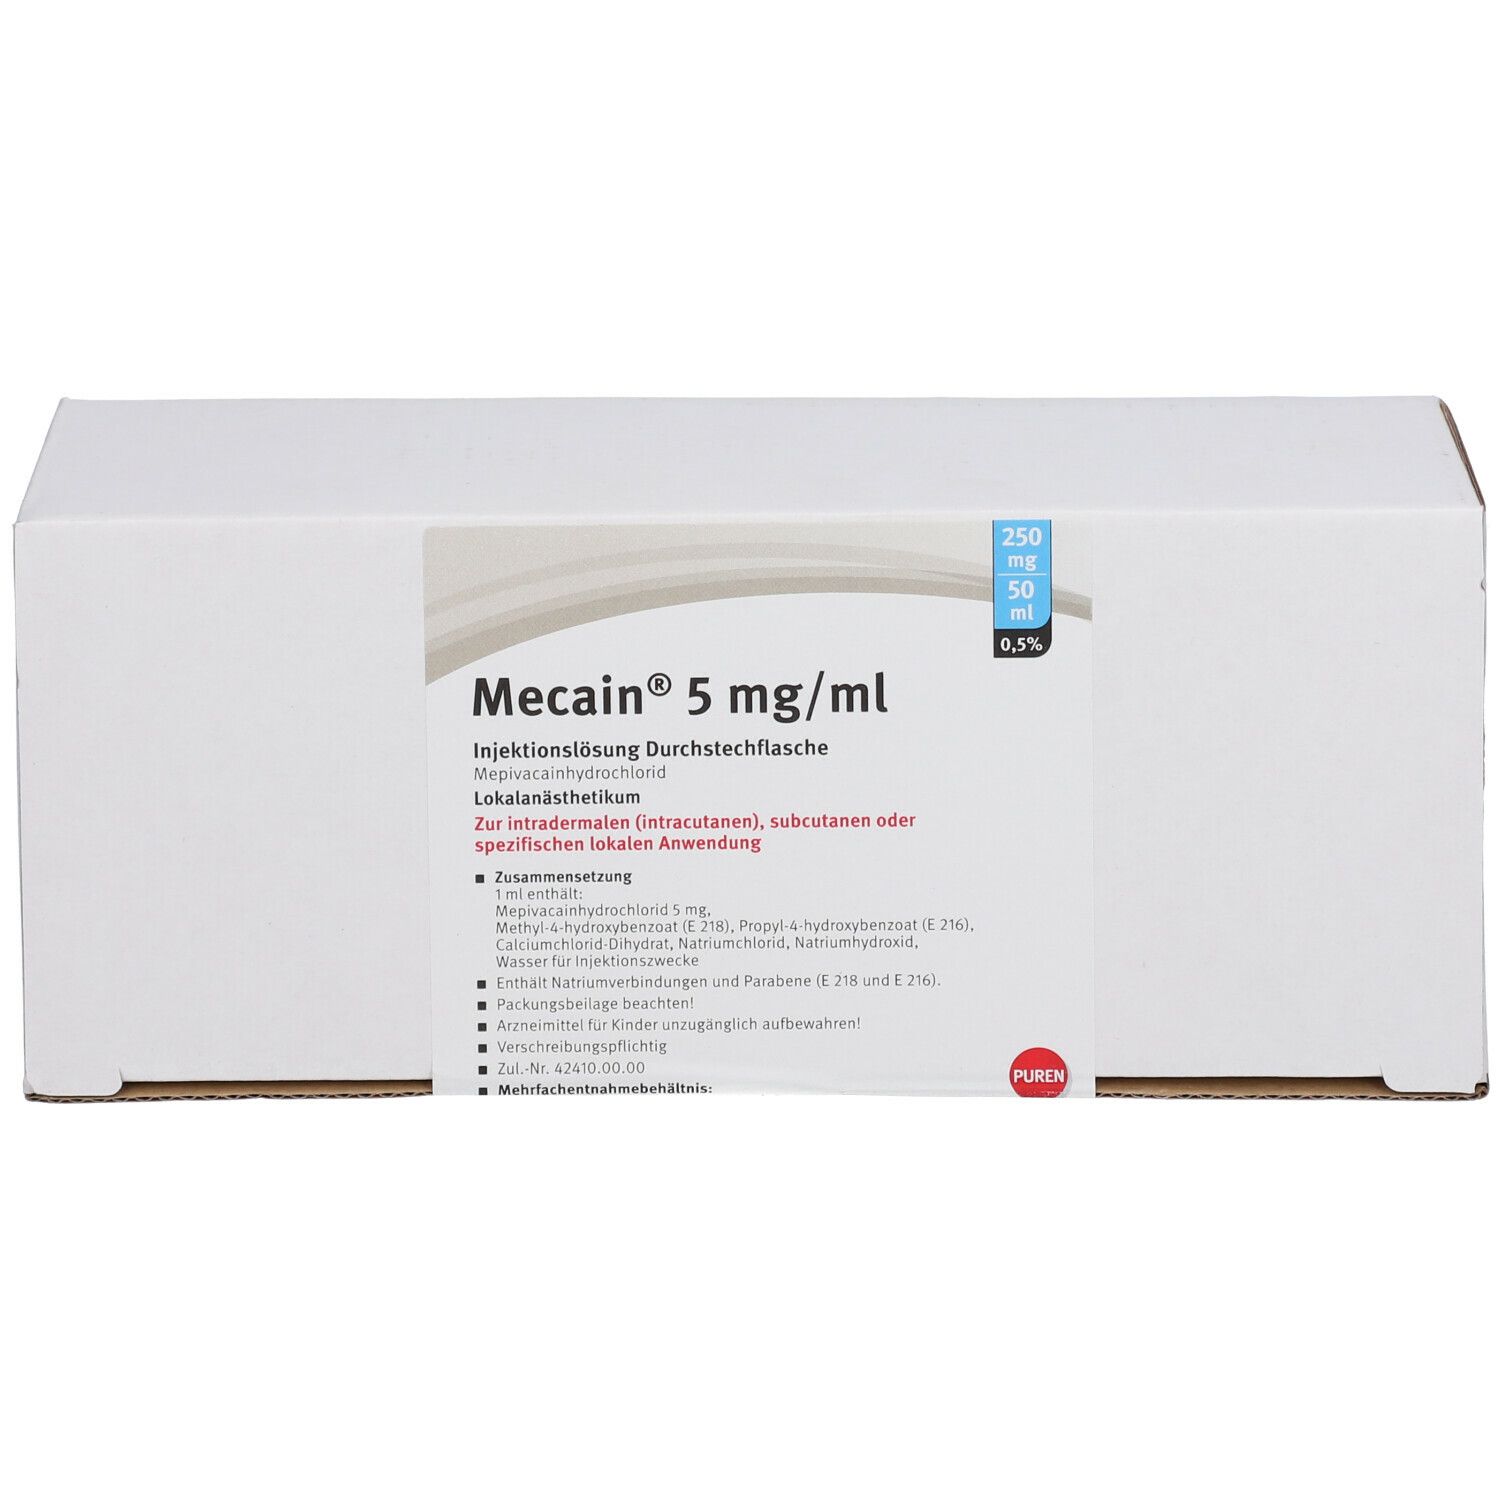 Mecain® 5 mg/ml